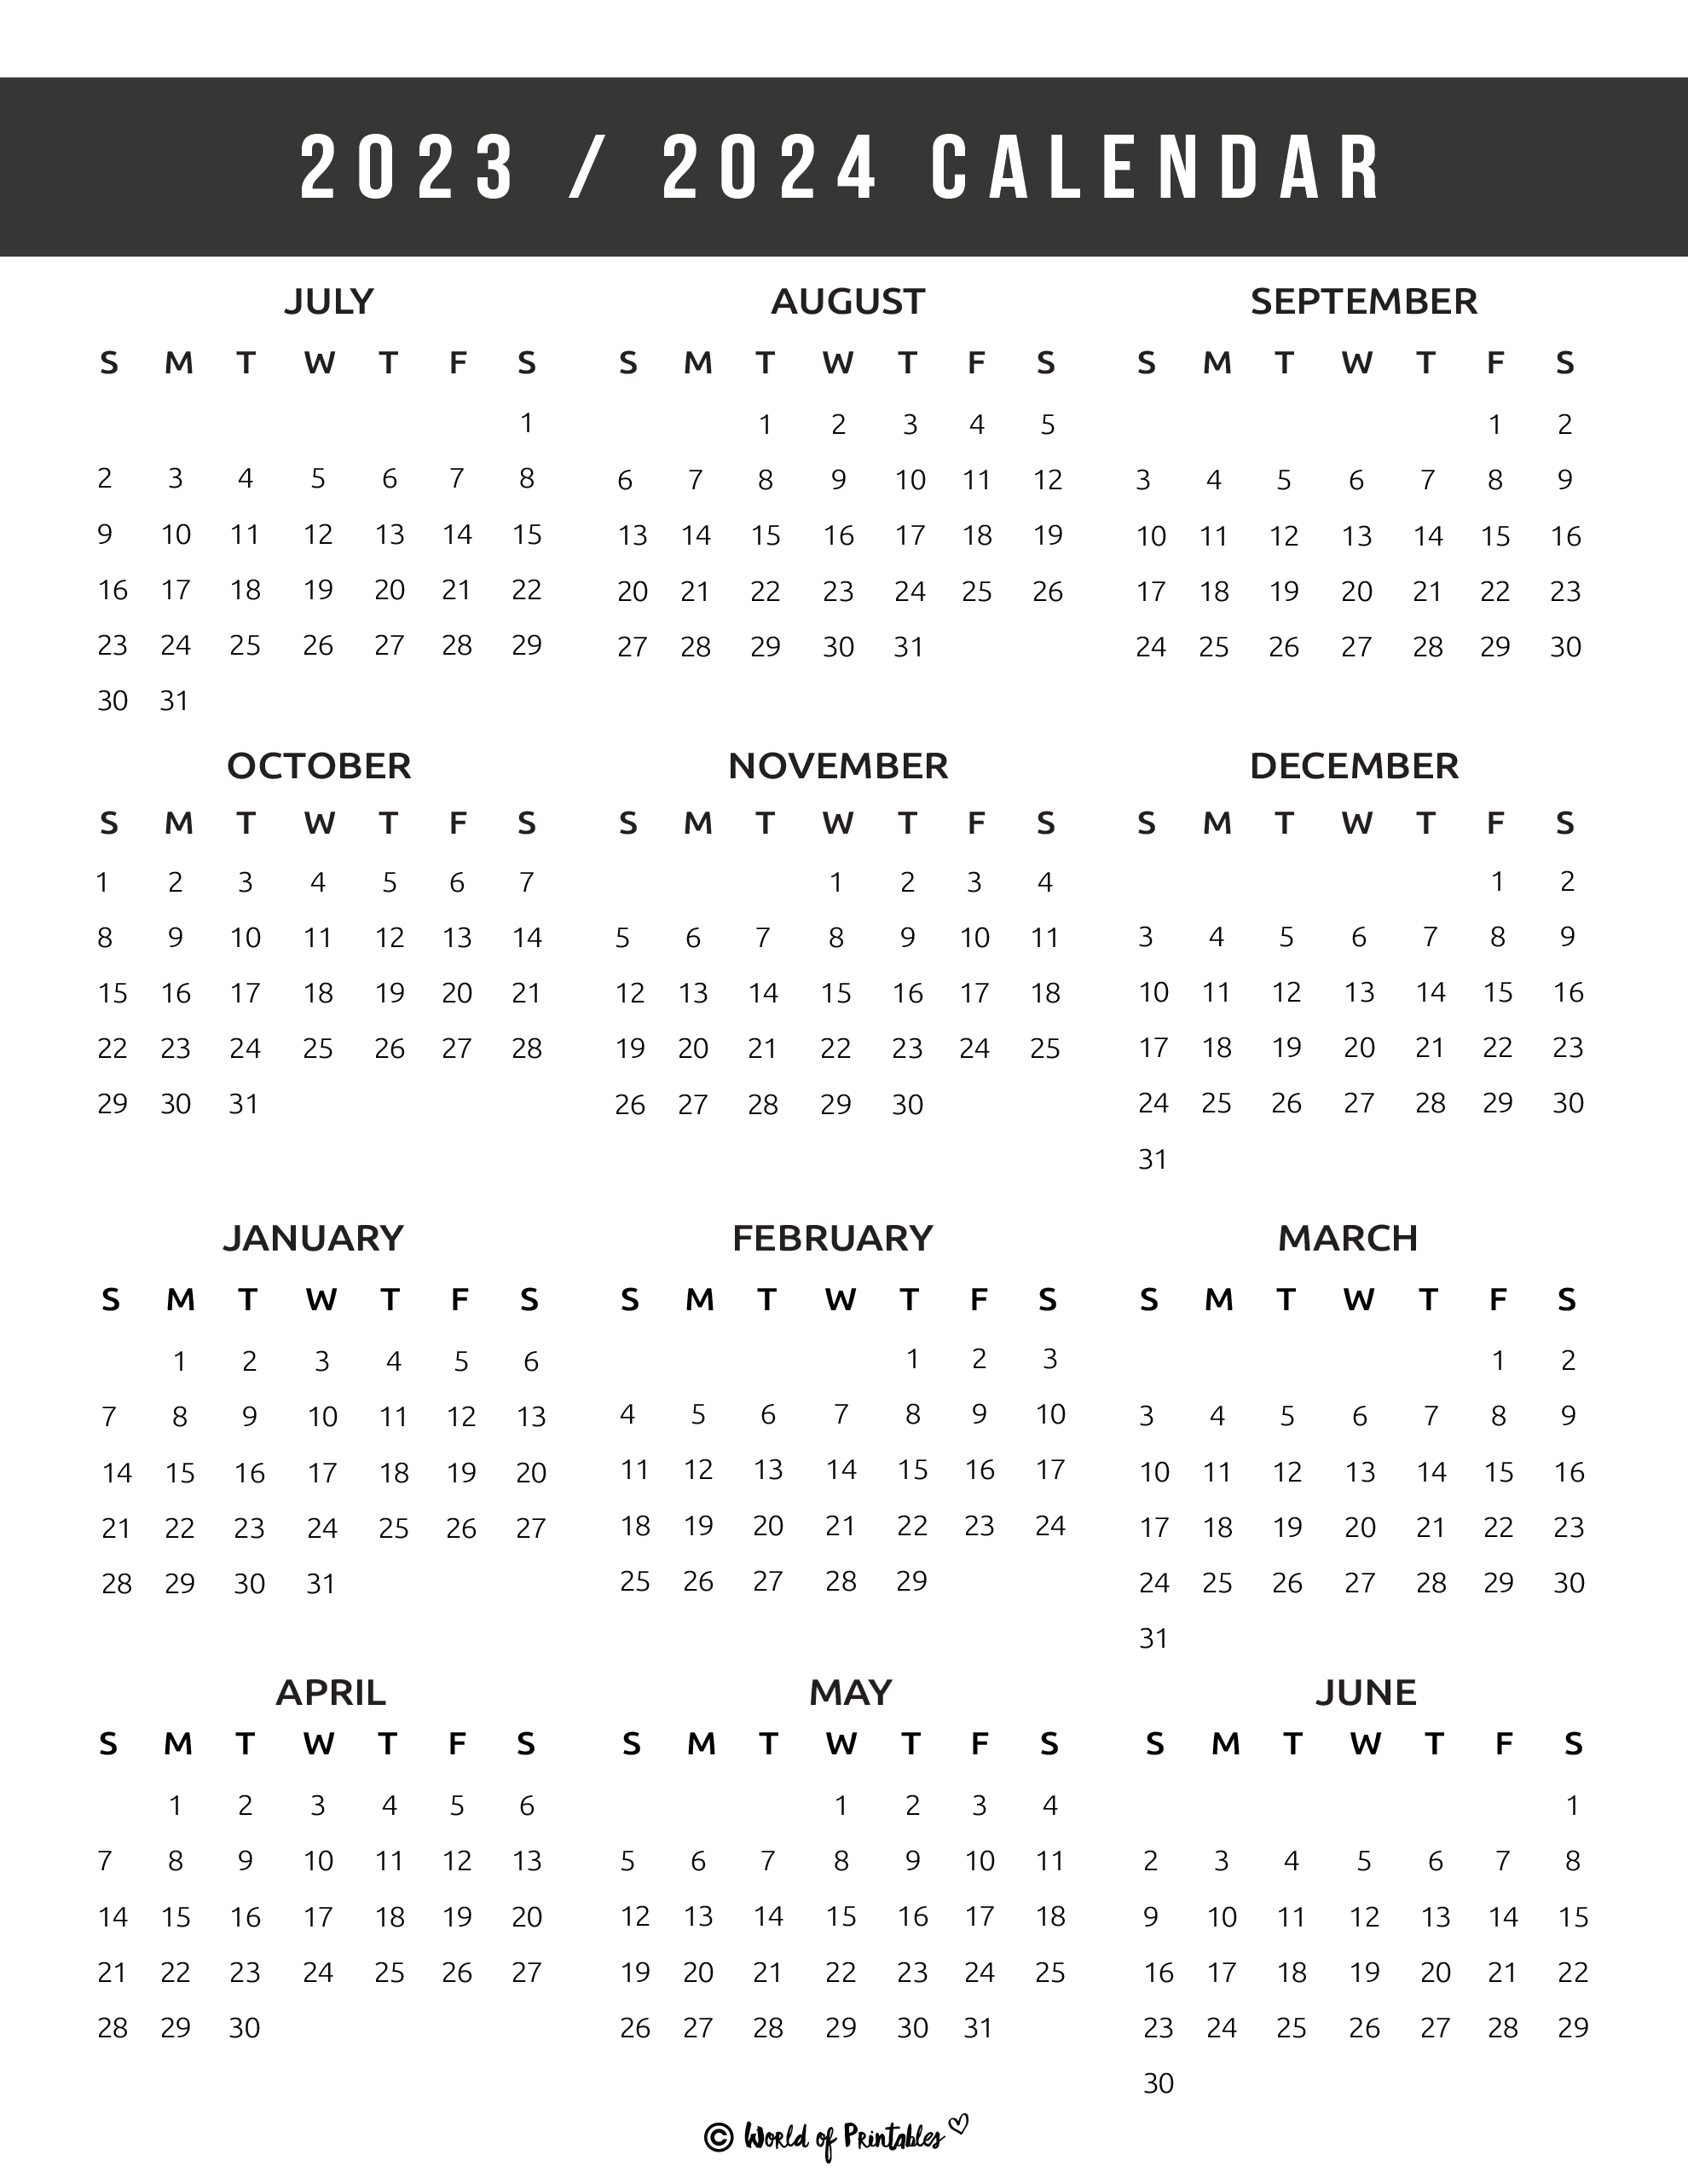 2023 2024 Calendar Free Printables - World Of Printables pertaining to June 2023 Through May 2024 Calendar